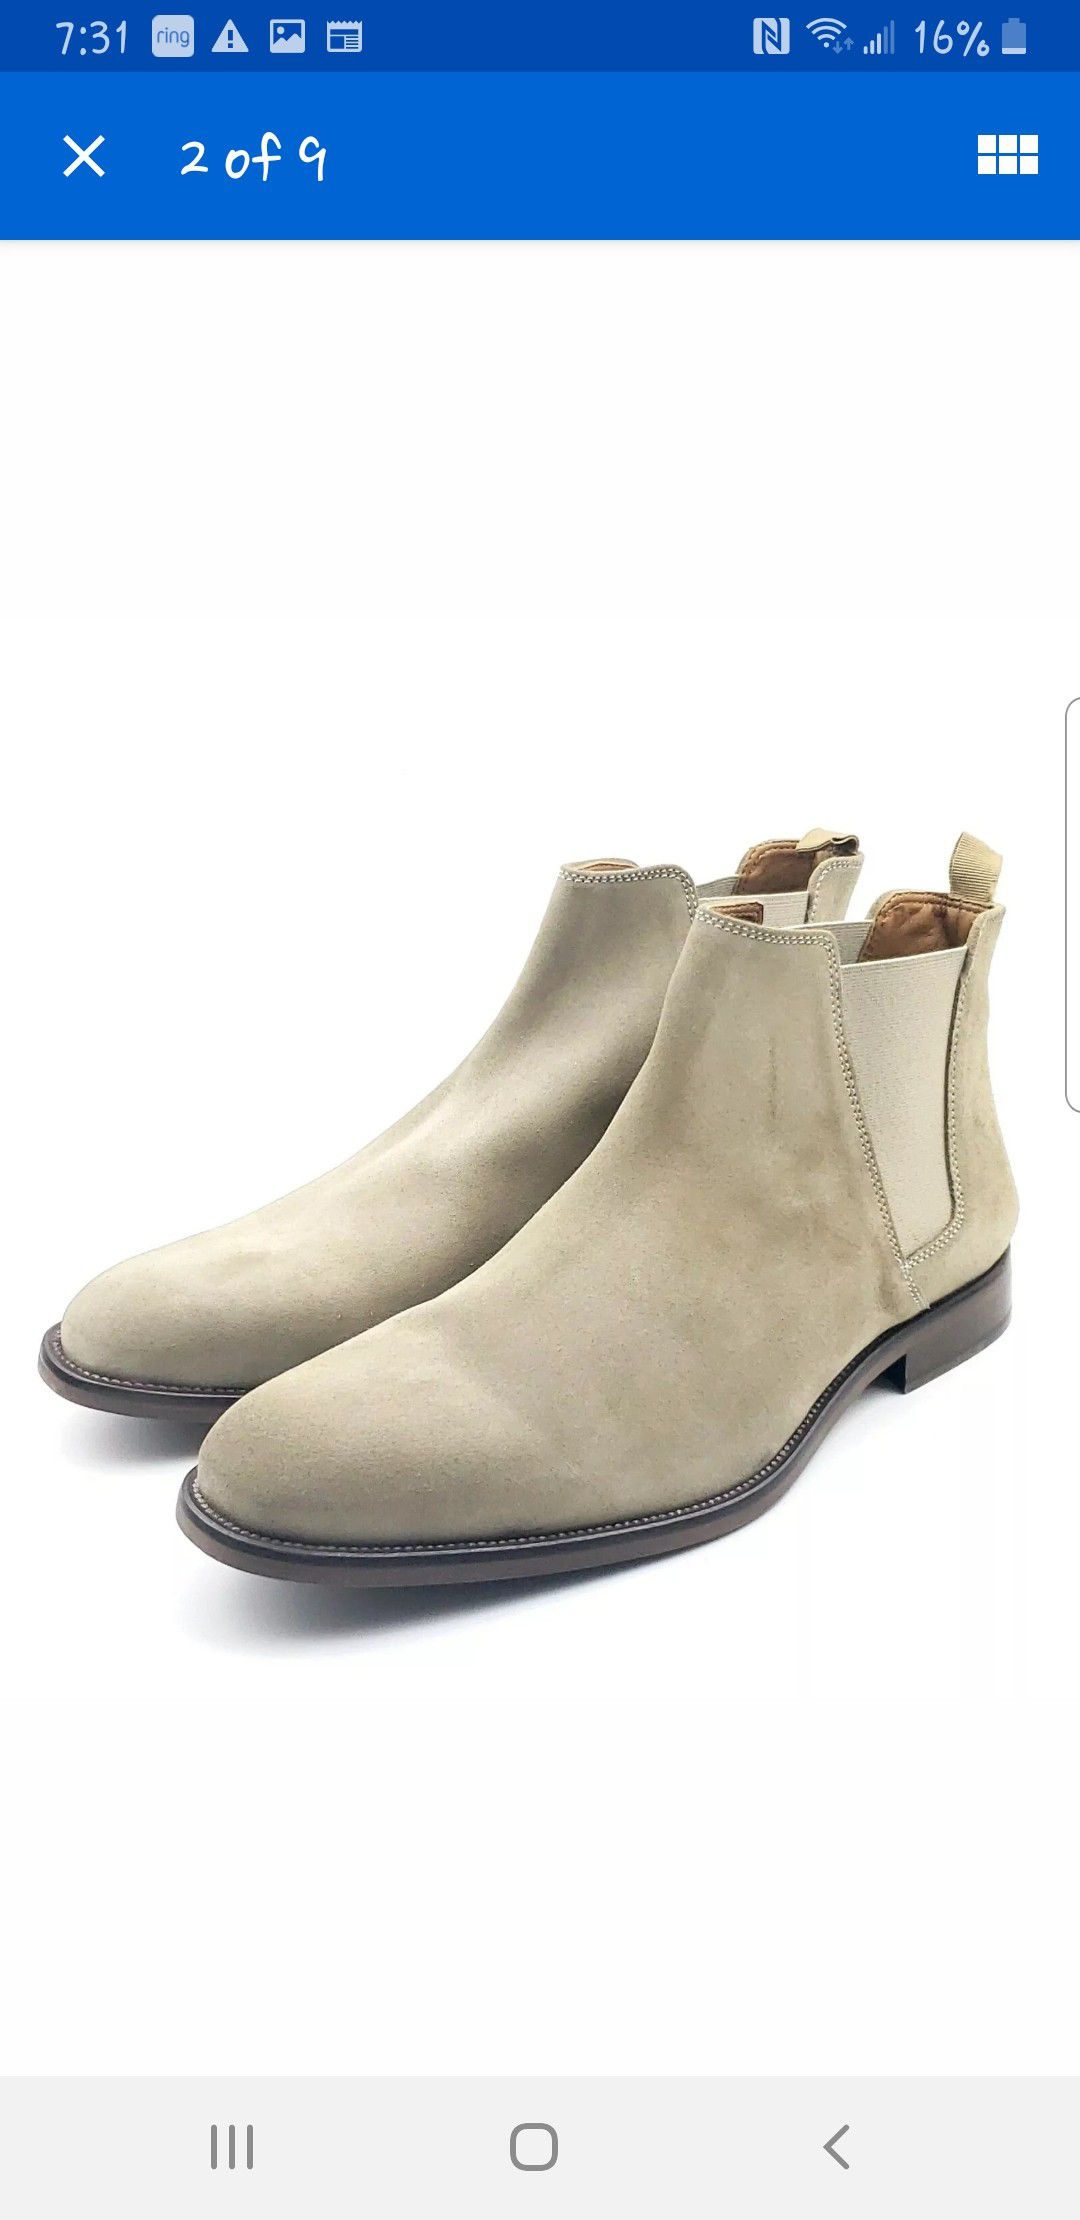 Aldo Vianello-r Mens Light Beige Leather Suede Chelsea Ankle Boots